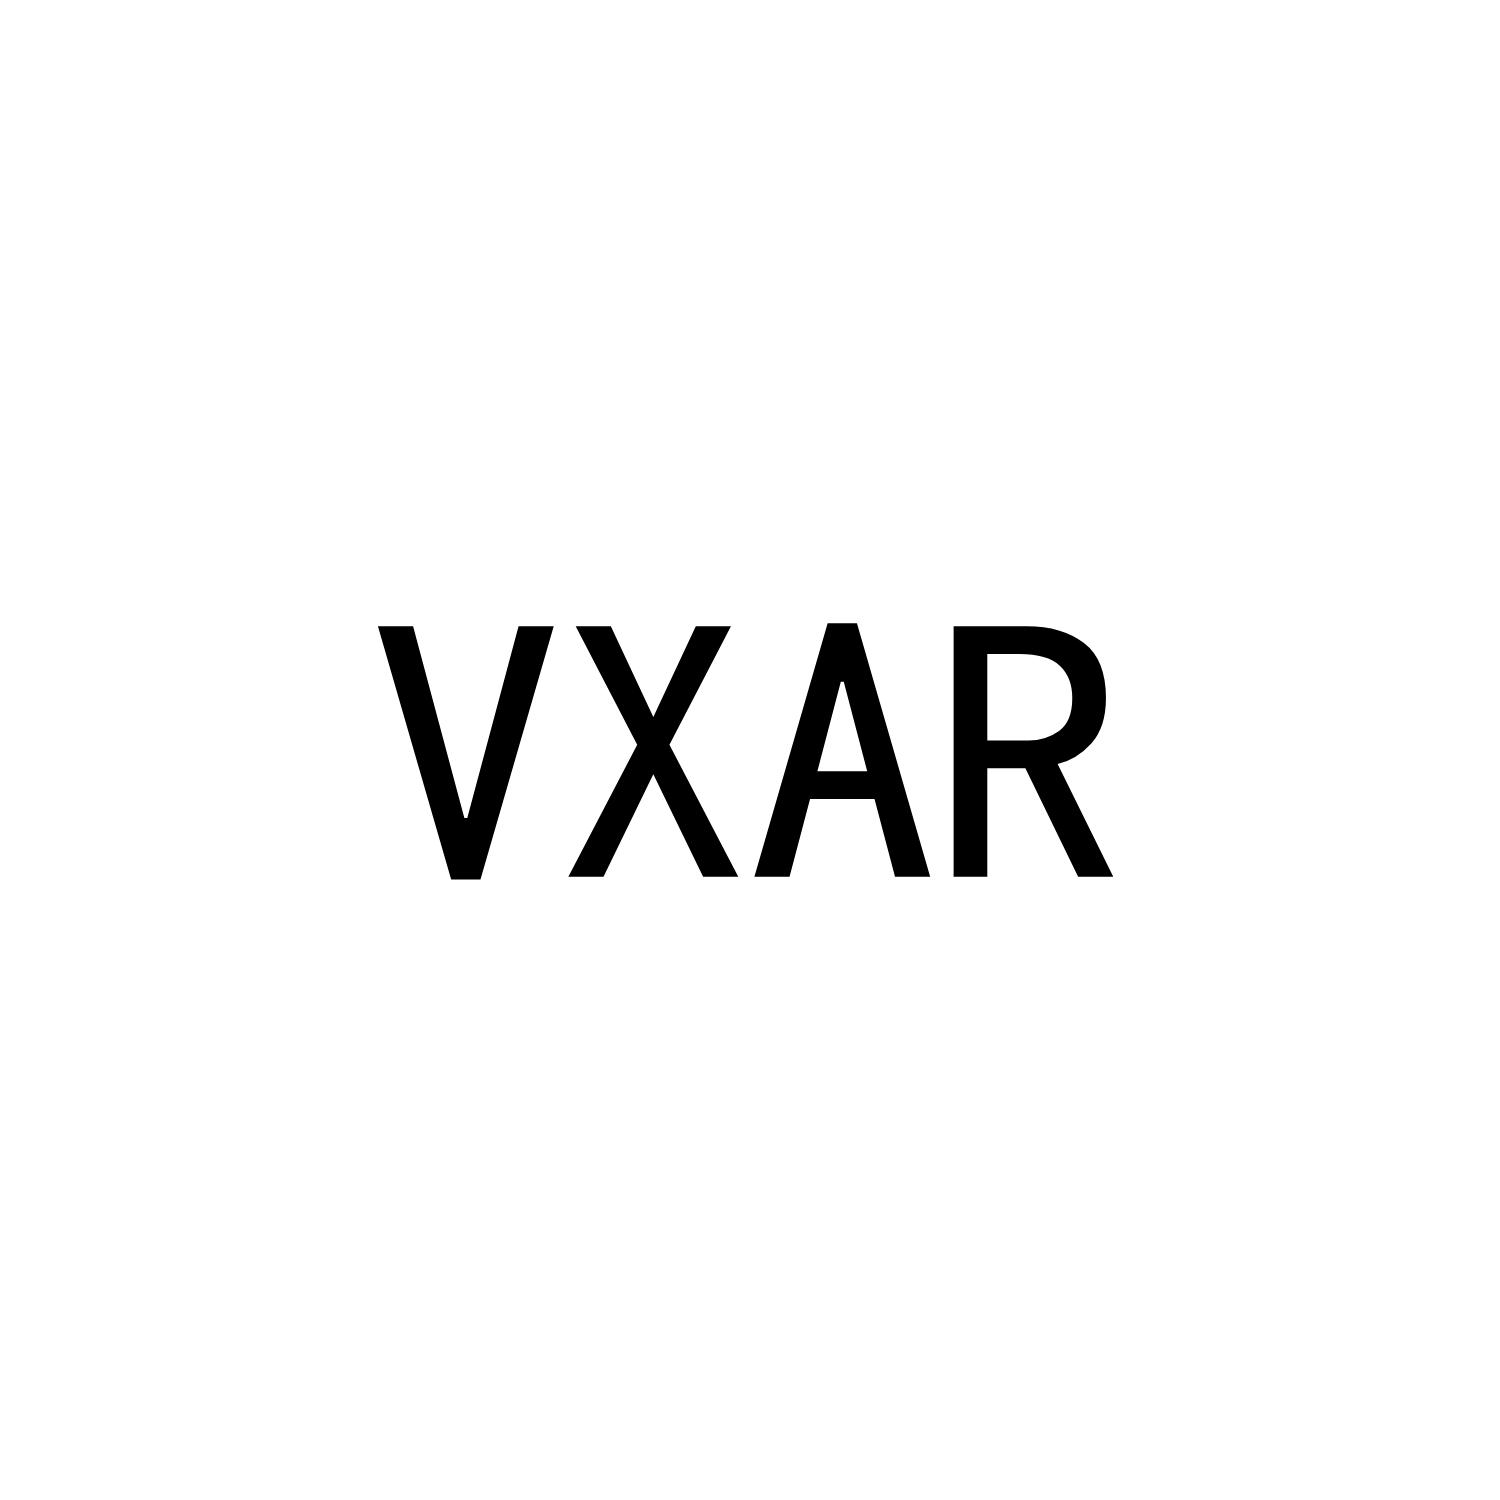 VXAR